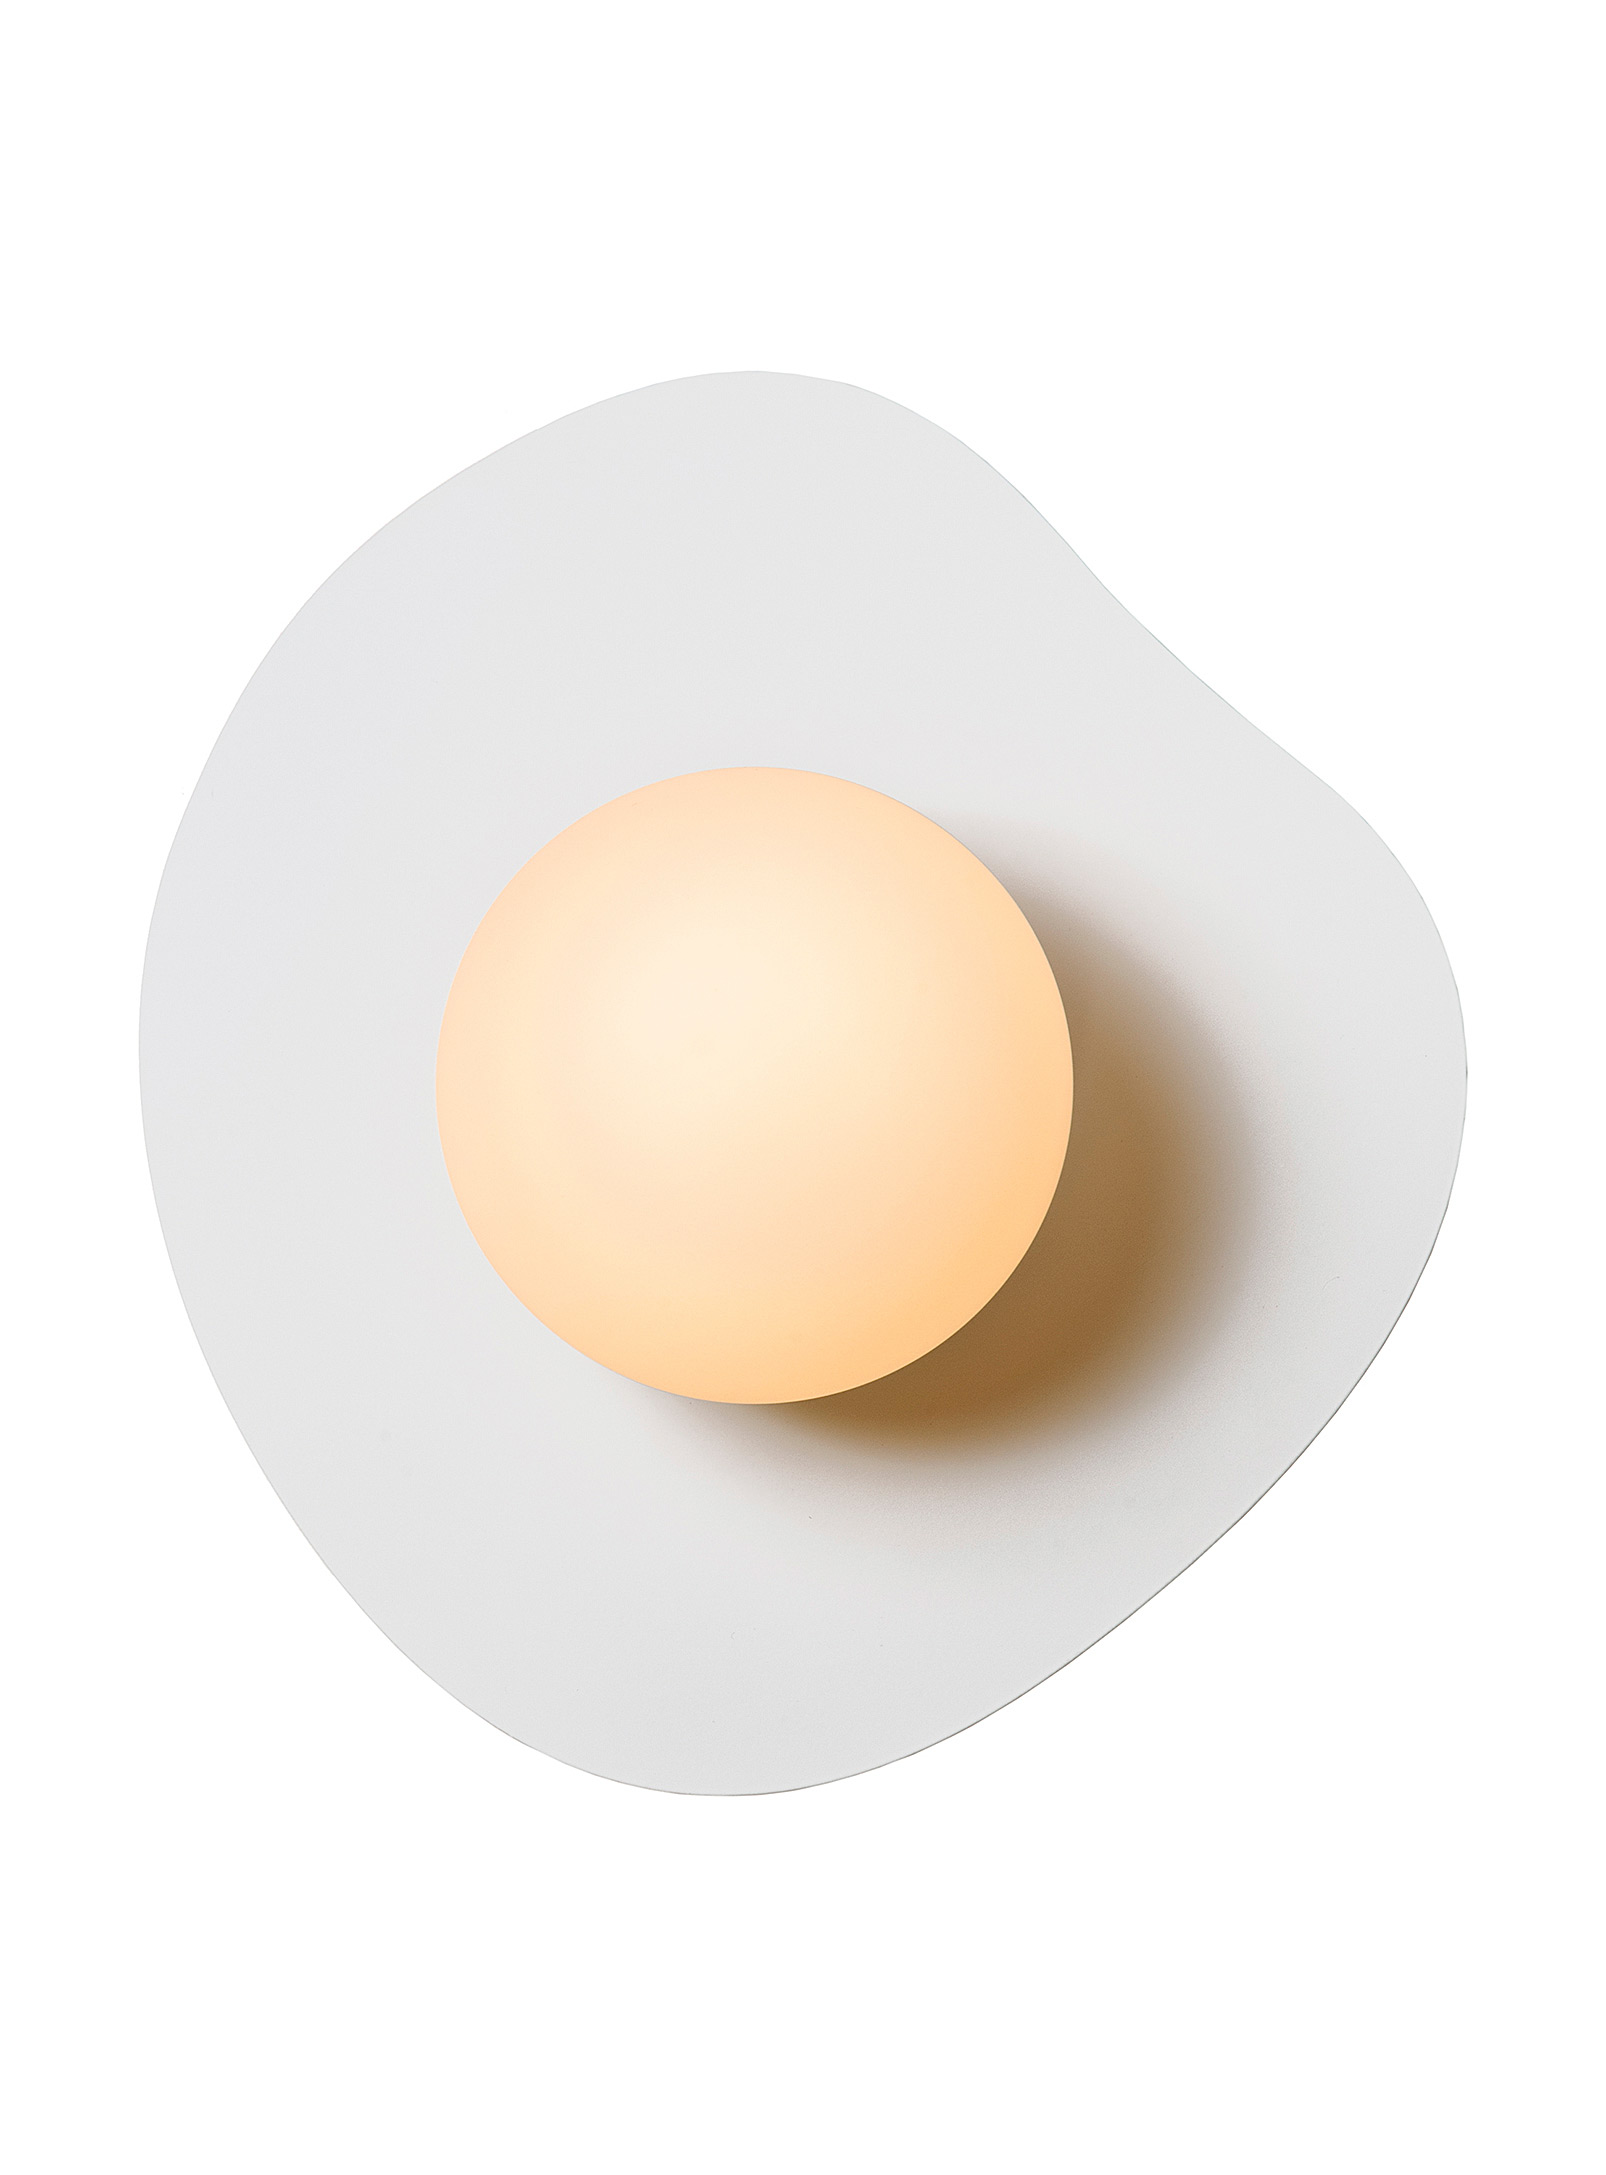 Luminaire Authentik Nopal Asymmetrical Light Fixture In White